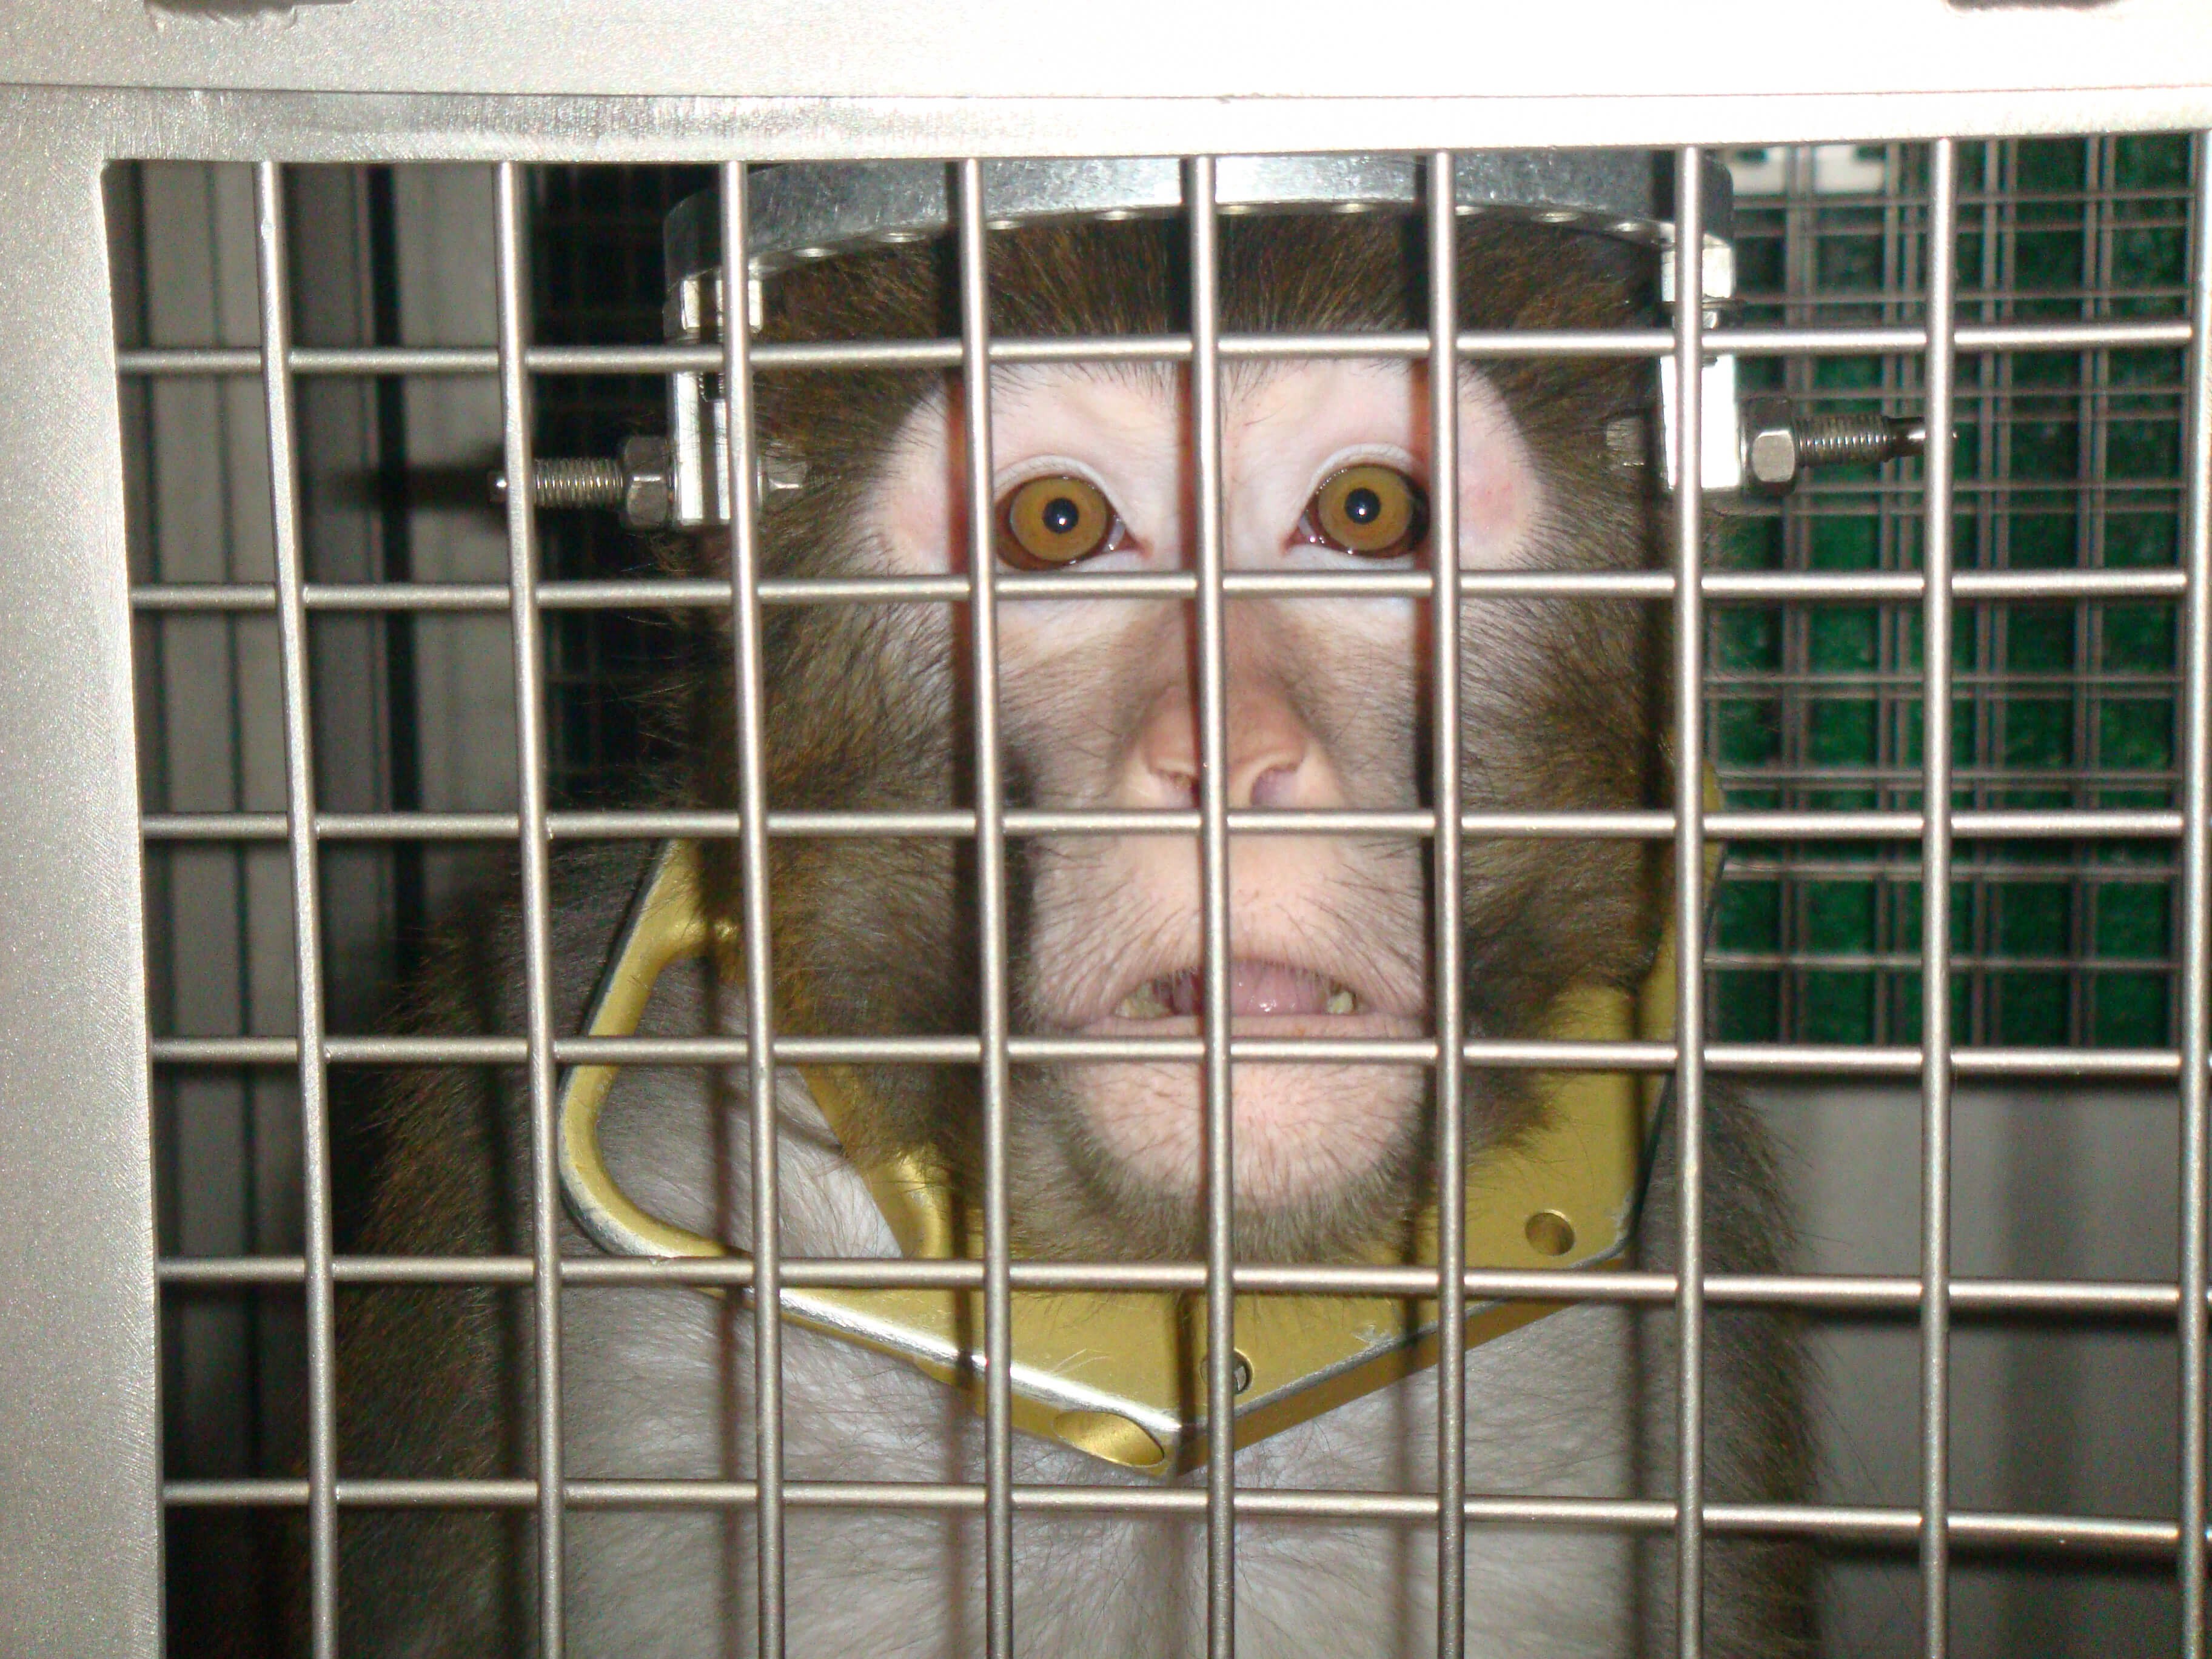 Animal Testing Facts and Statistics | PETA